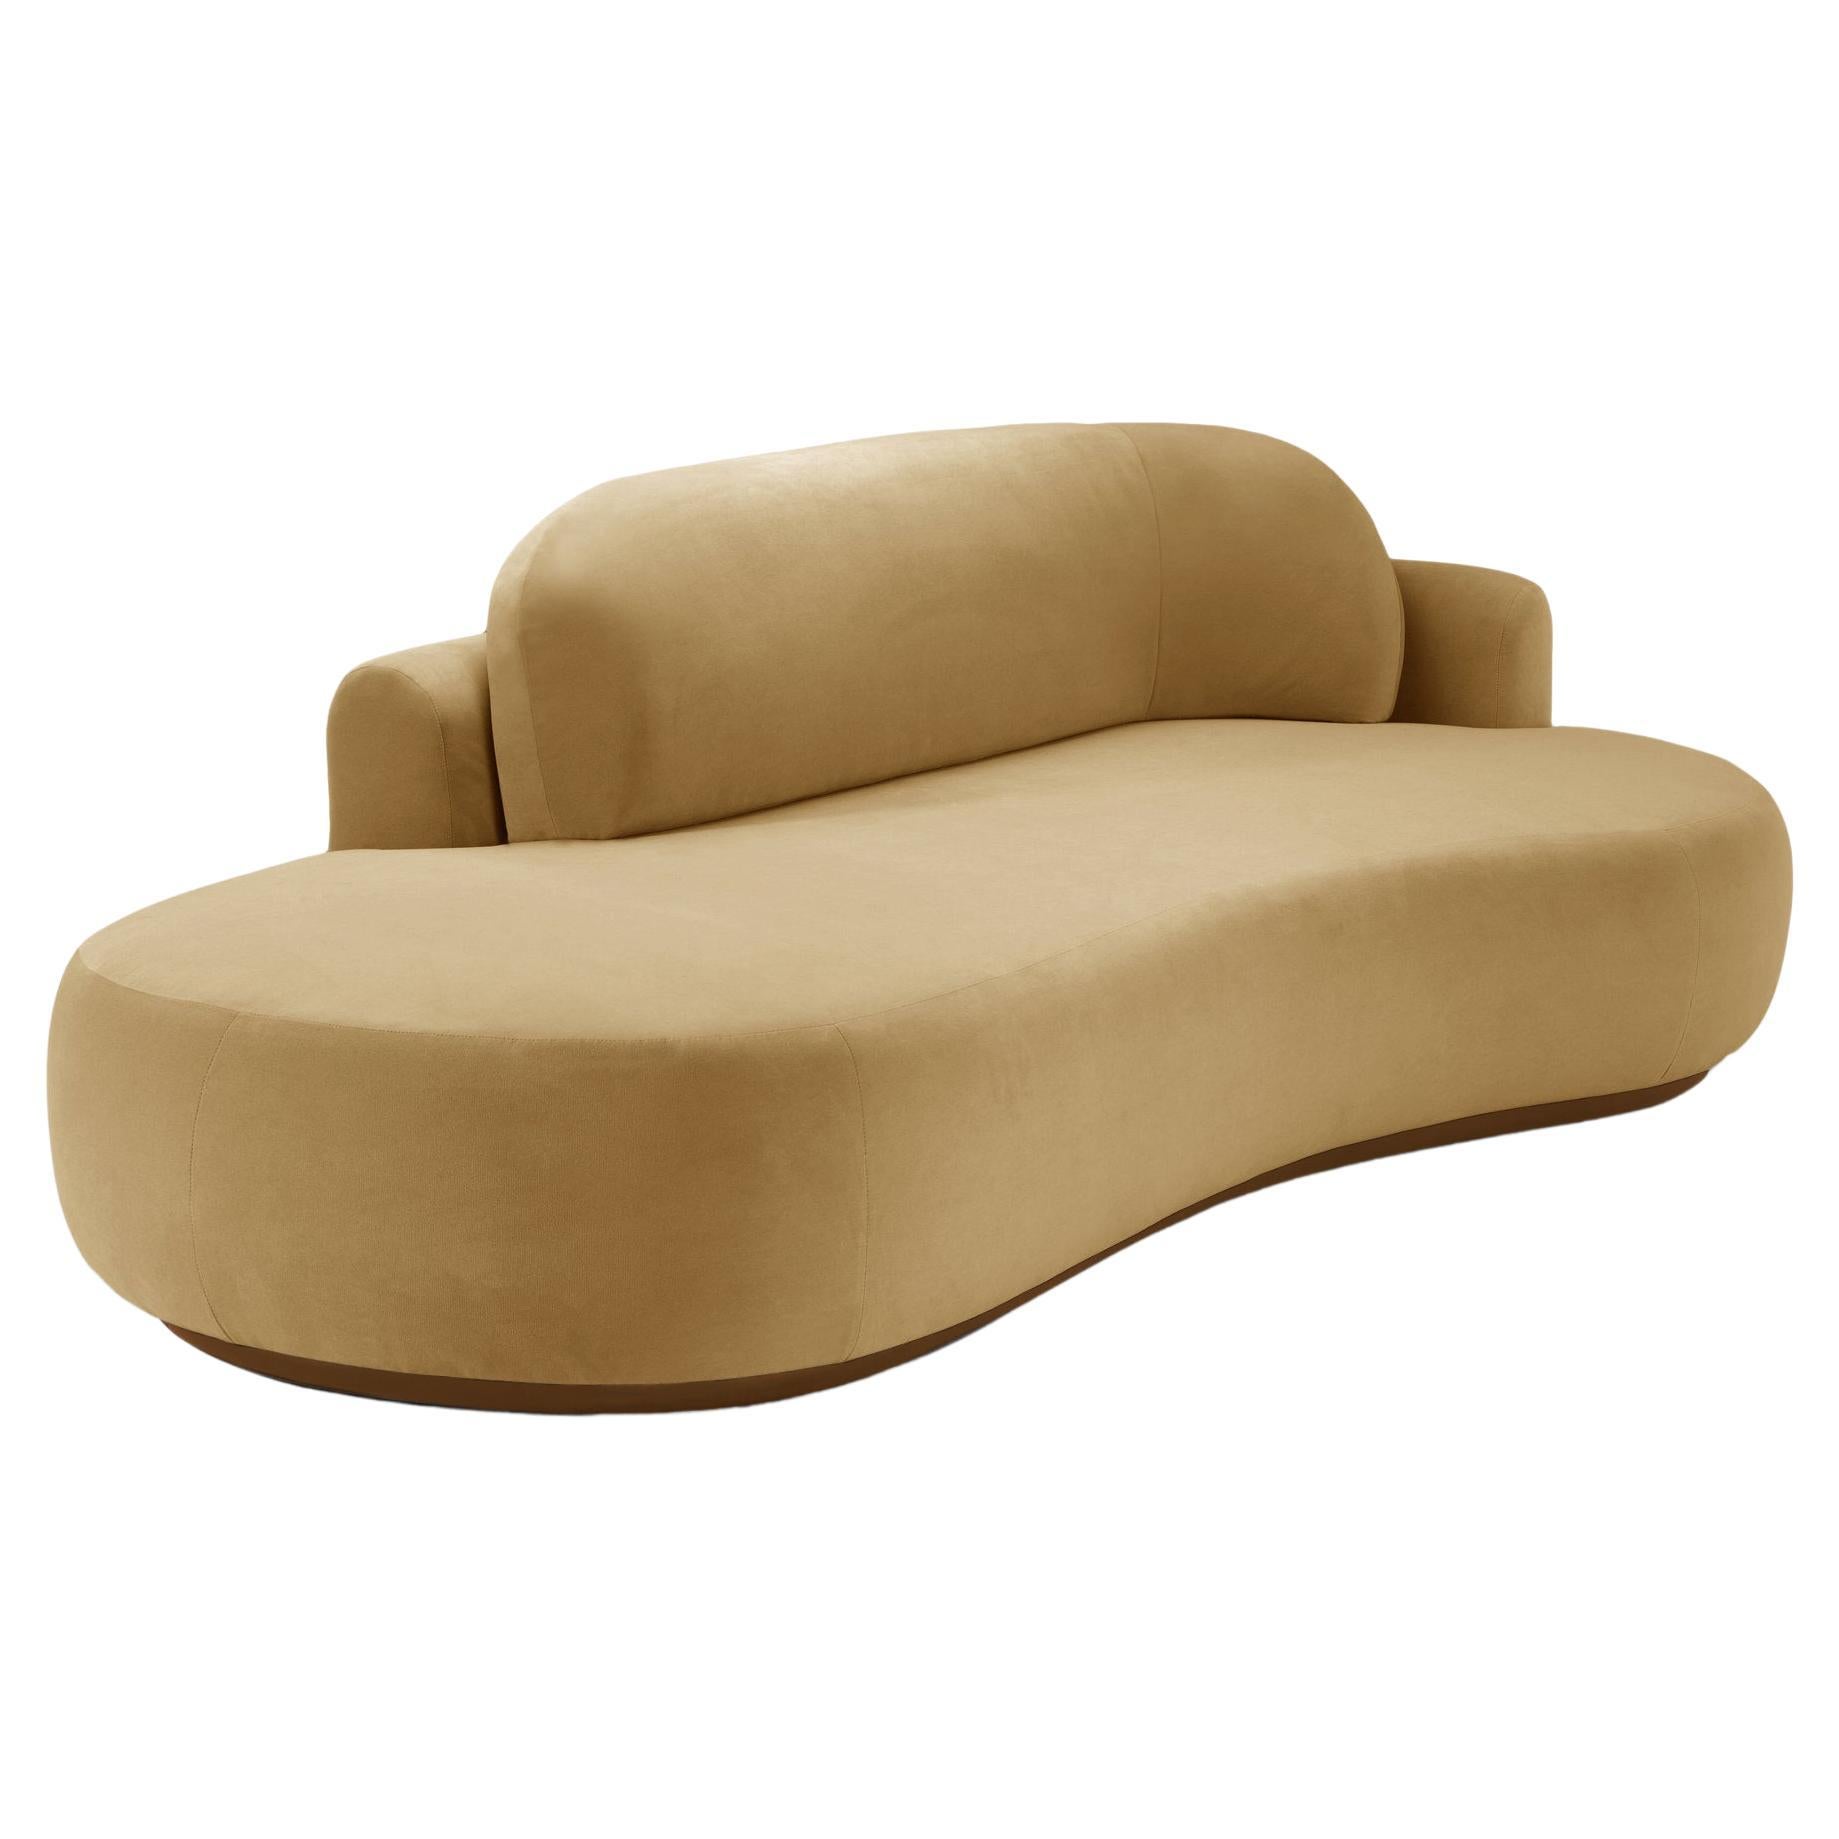 Naked Curved Sofa Single with Beech Ash-056-1 and Vigo Plantain